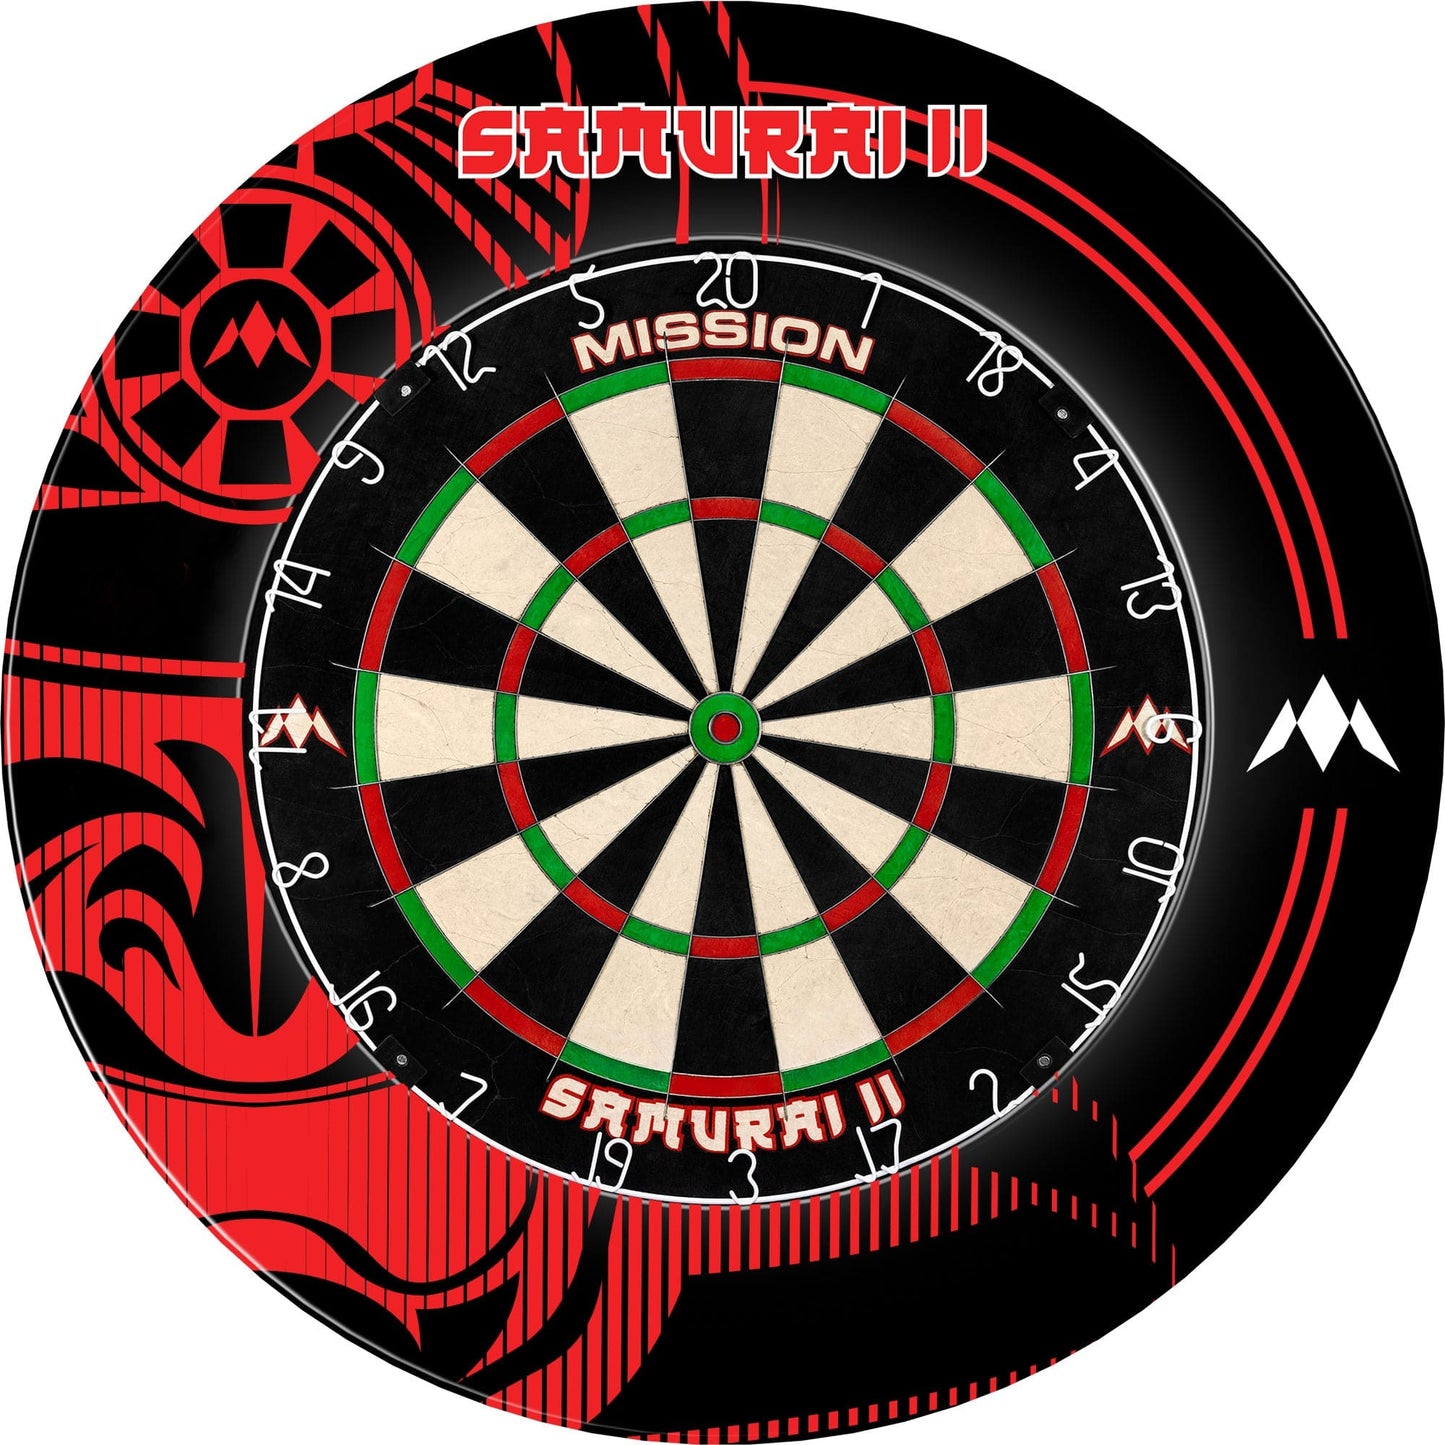 Mission Samurai II Professional Dartboard Surround - Red